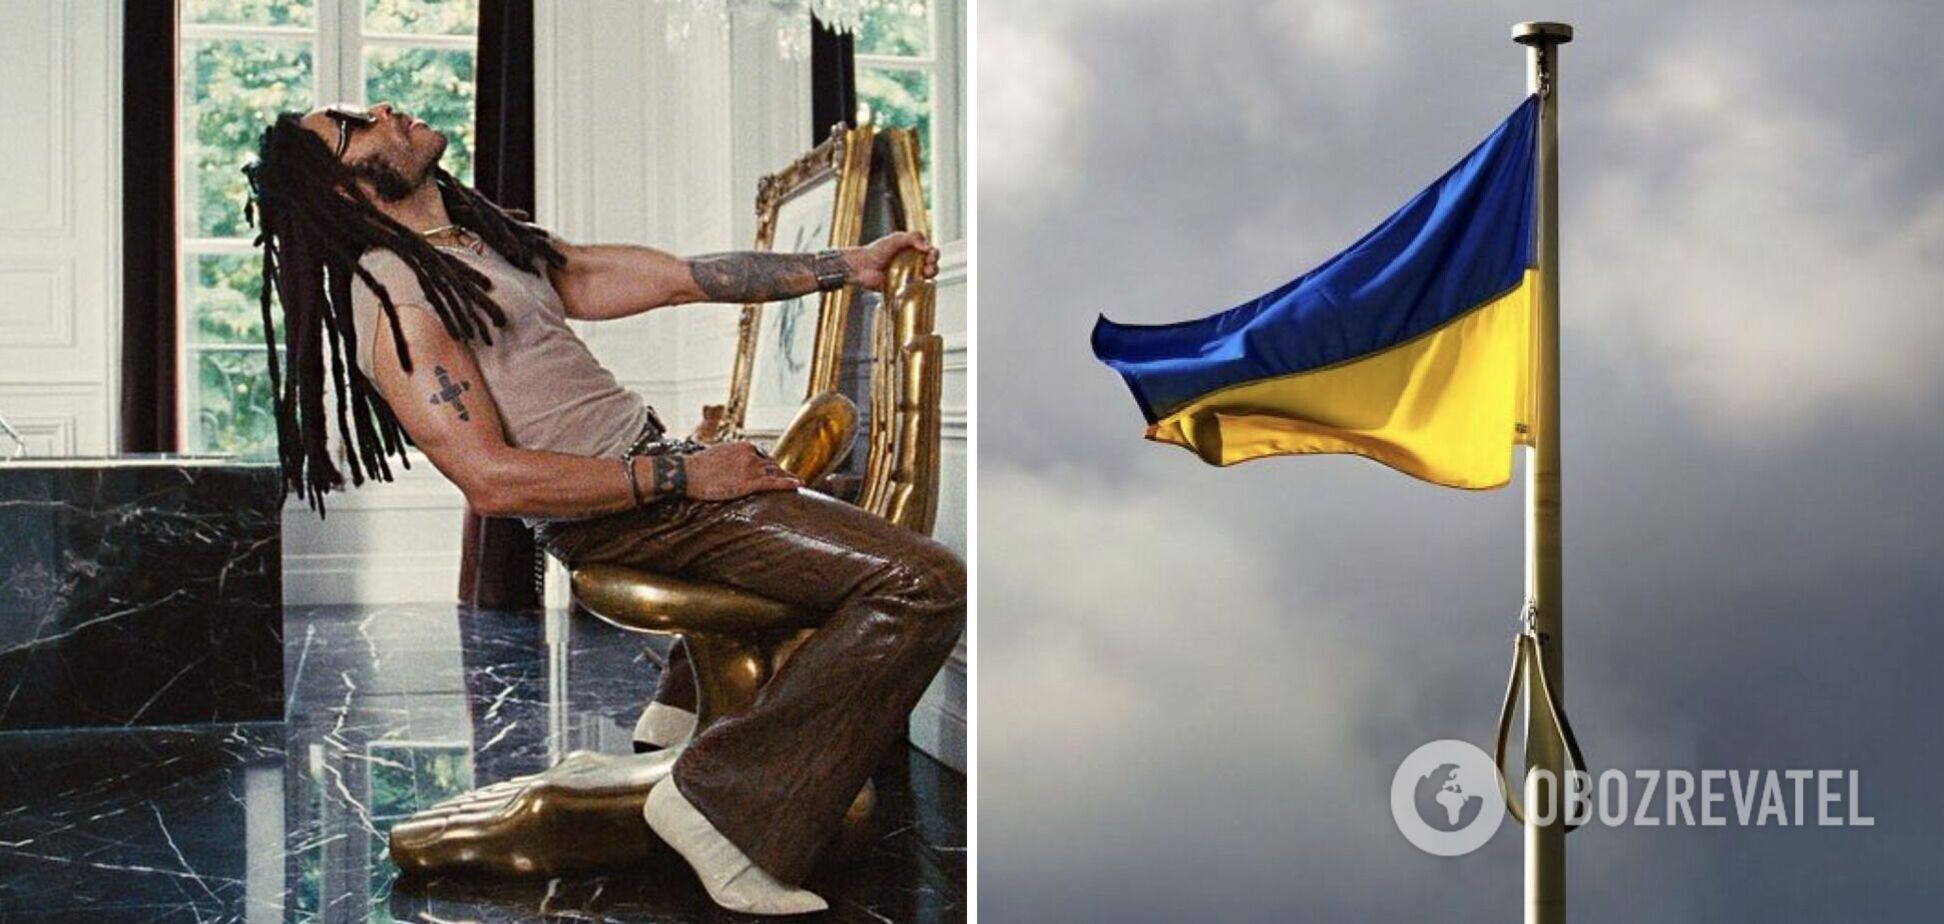 Рок-звезда Ленни Кравиц назвал себя украинцем после съемок в клипе Тани Муиньо